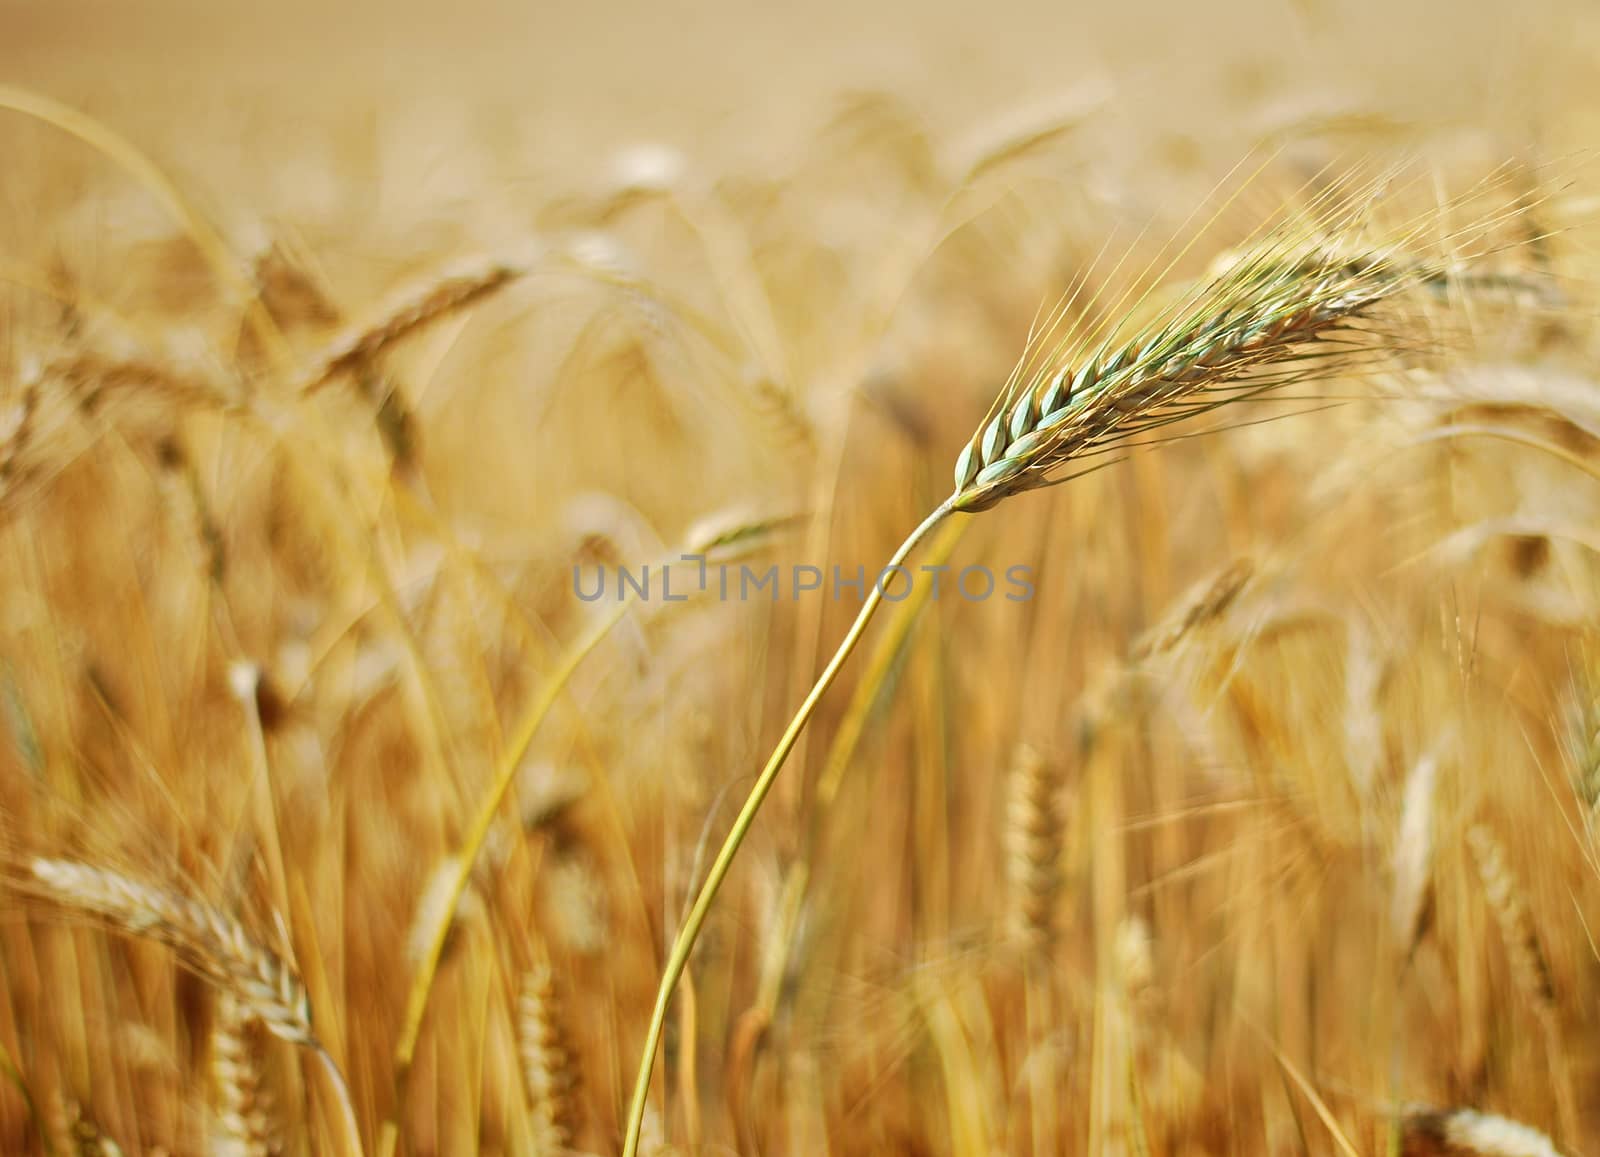 ripe ears of grain, field crops in August before harvest